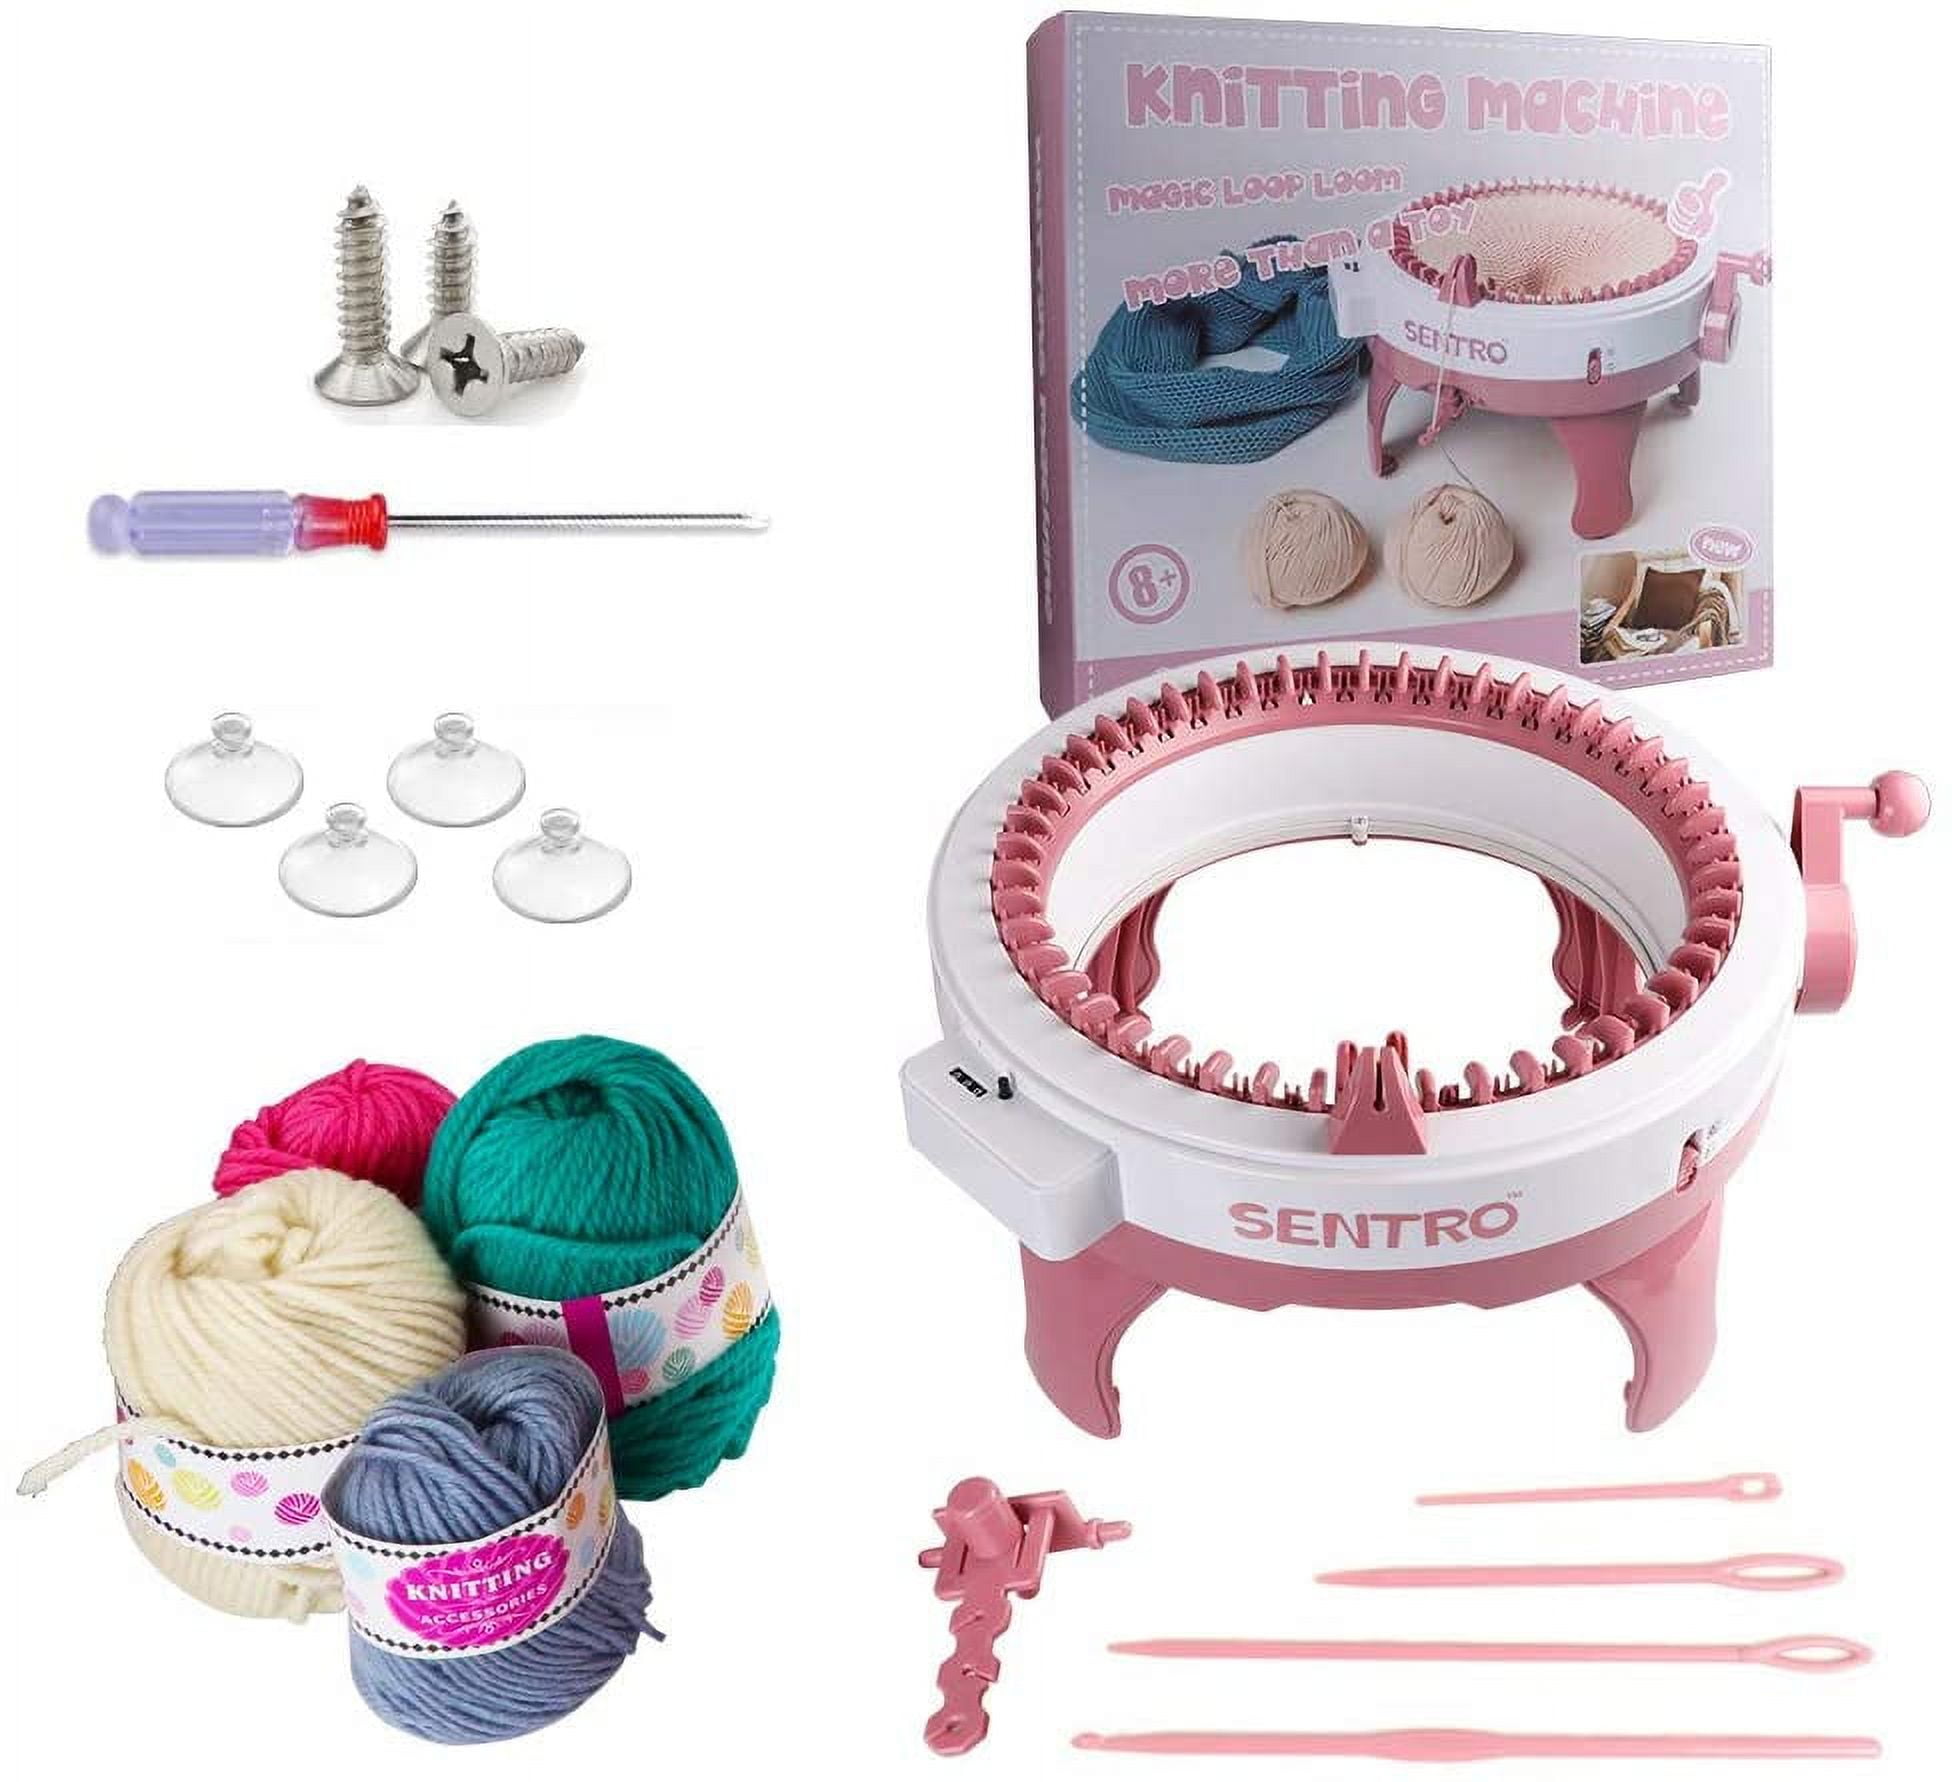  SENTRO Knitting Machine, 48 Needles Smart Weaving Loom